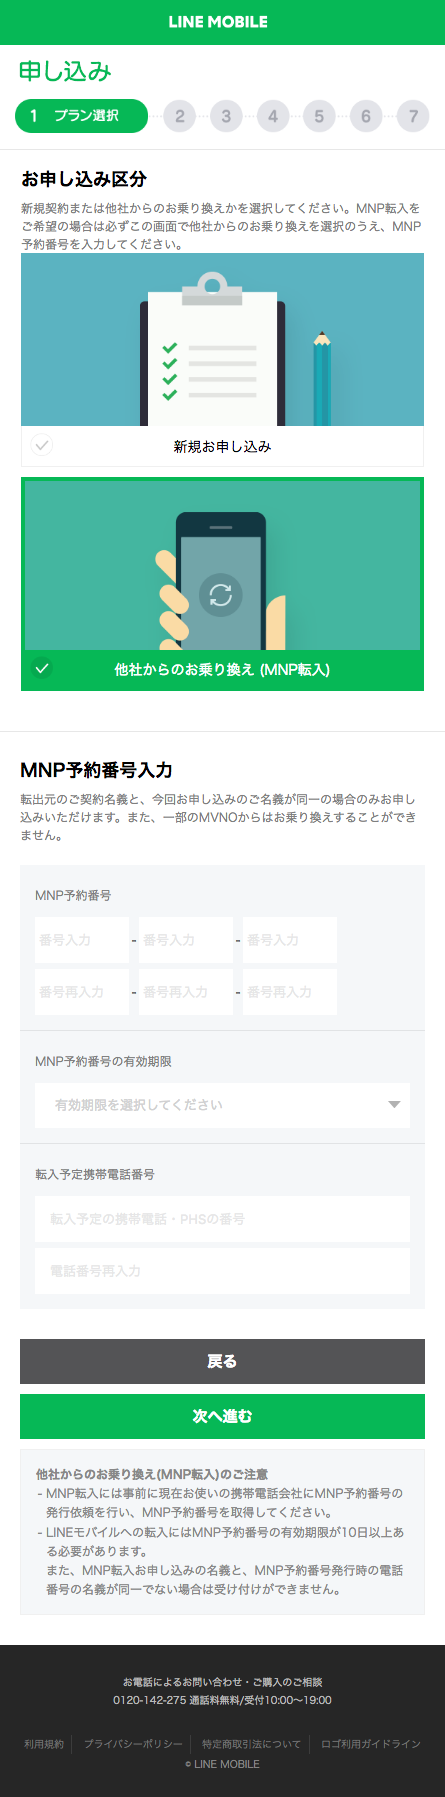 MNPに関する入力ページ